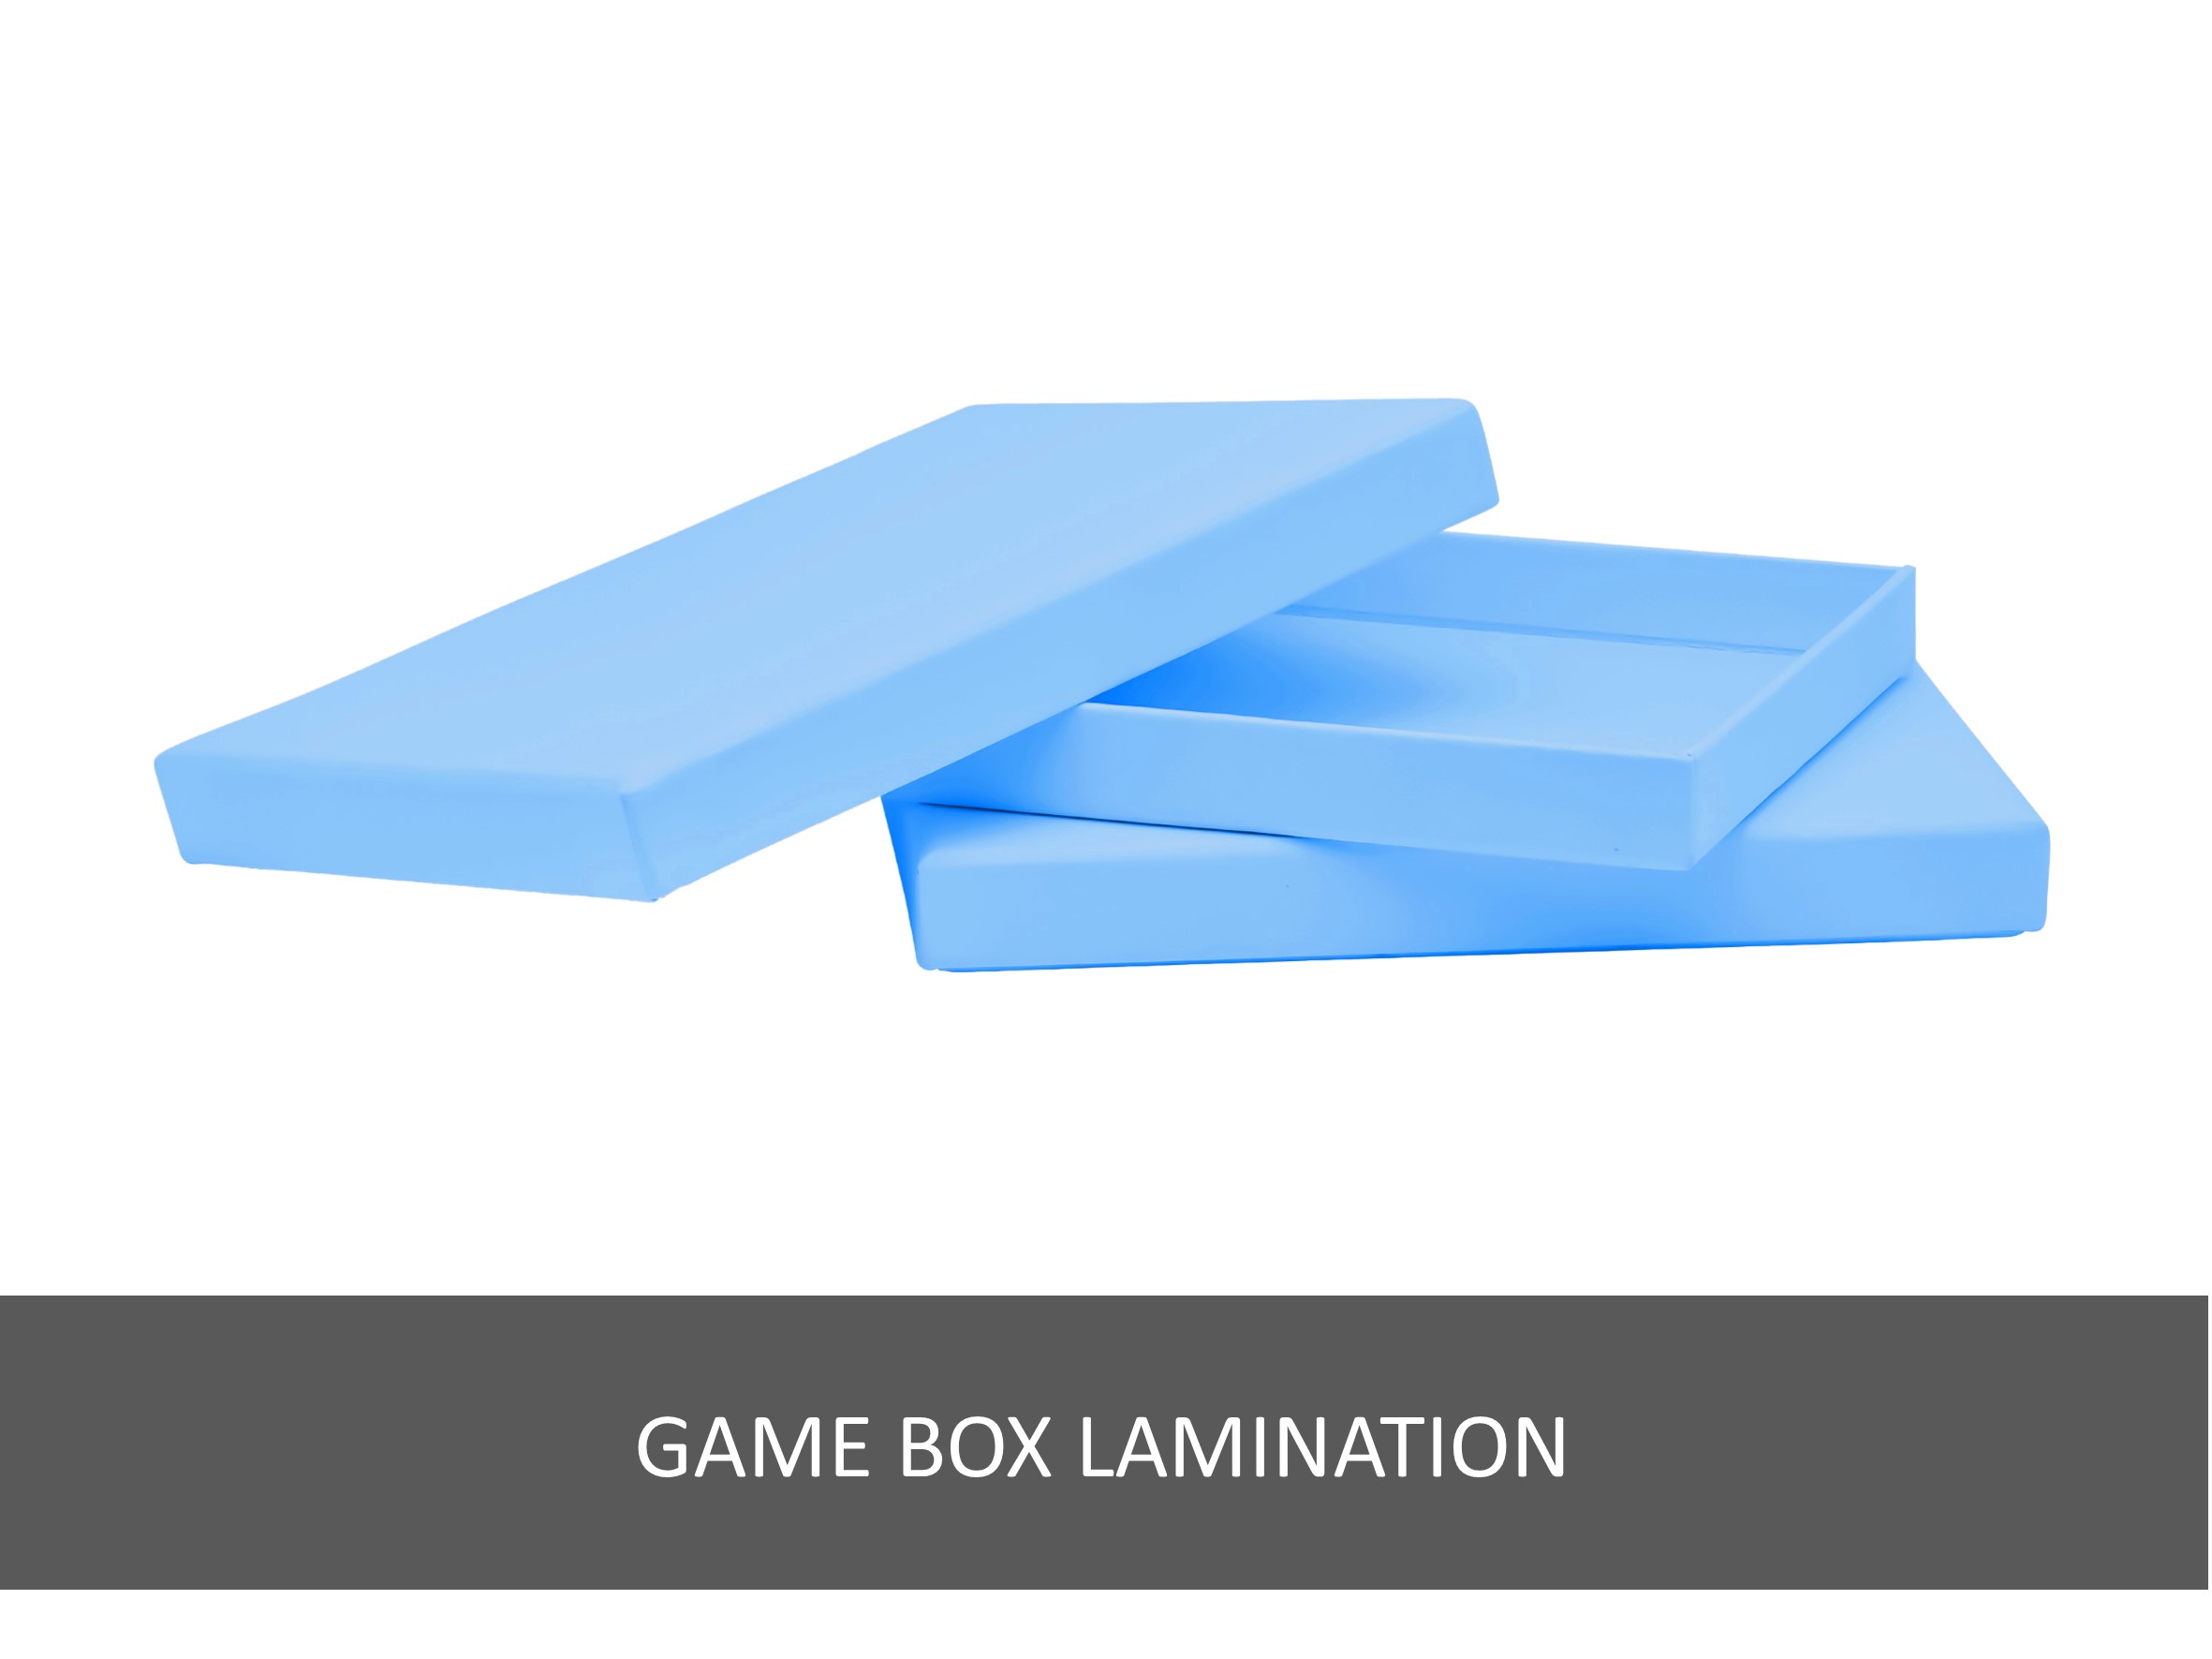 Game box lamination